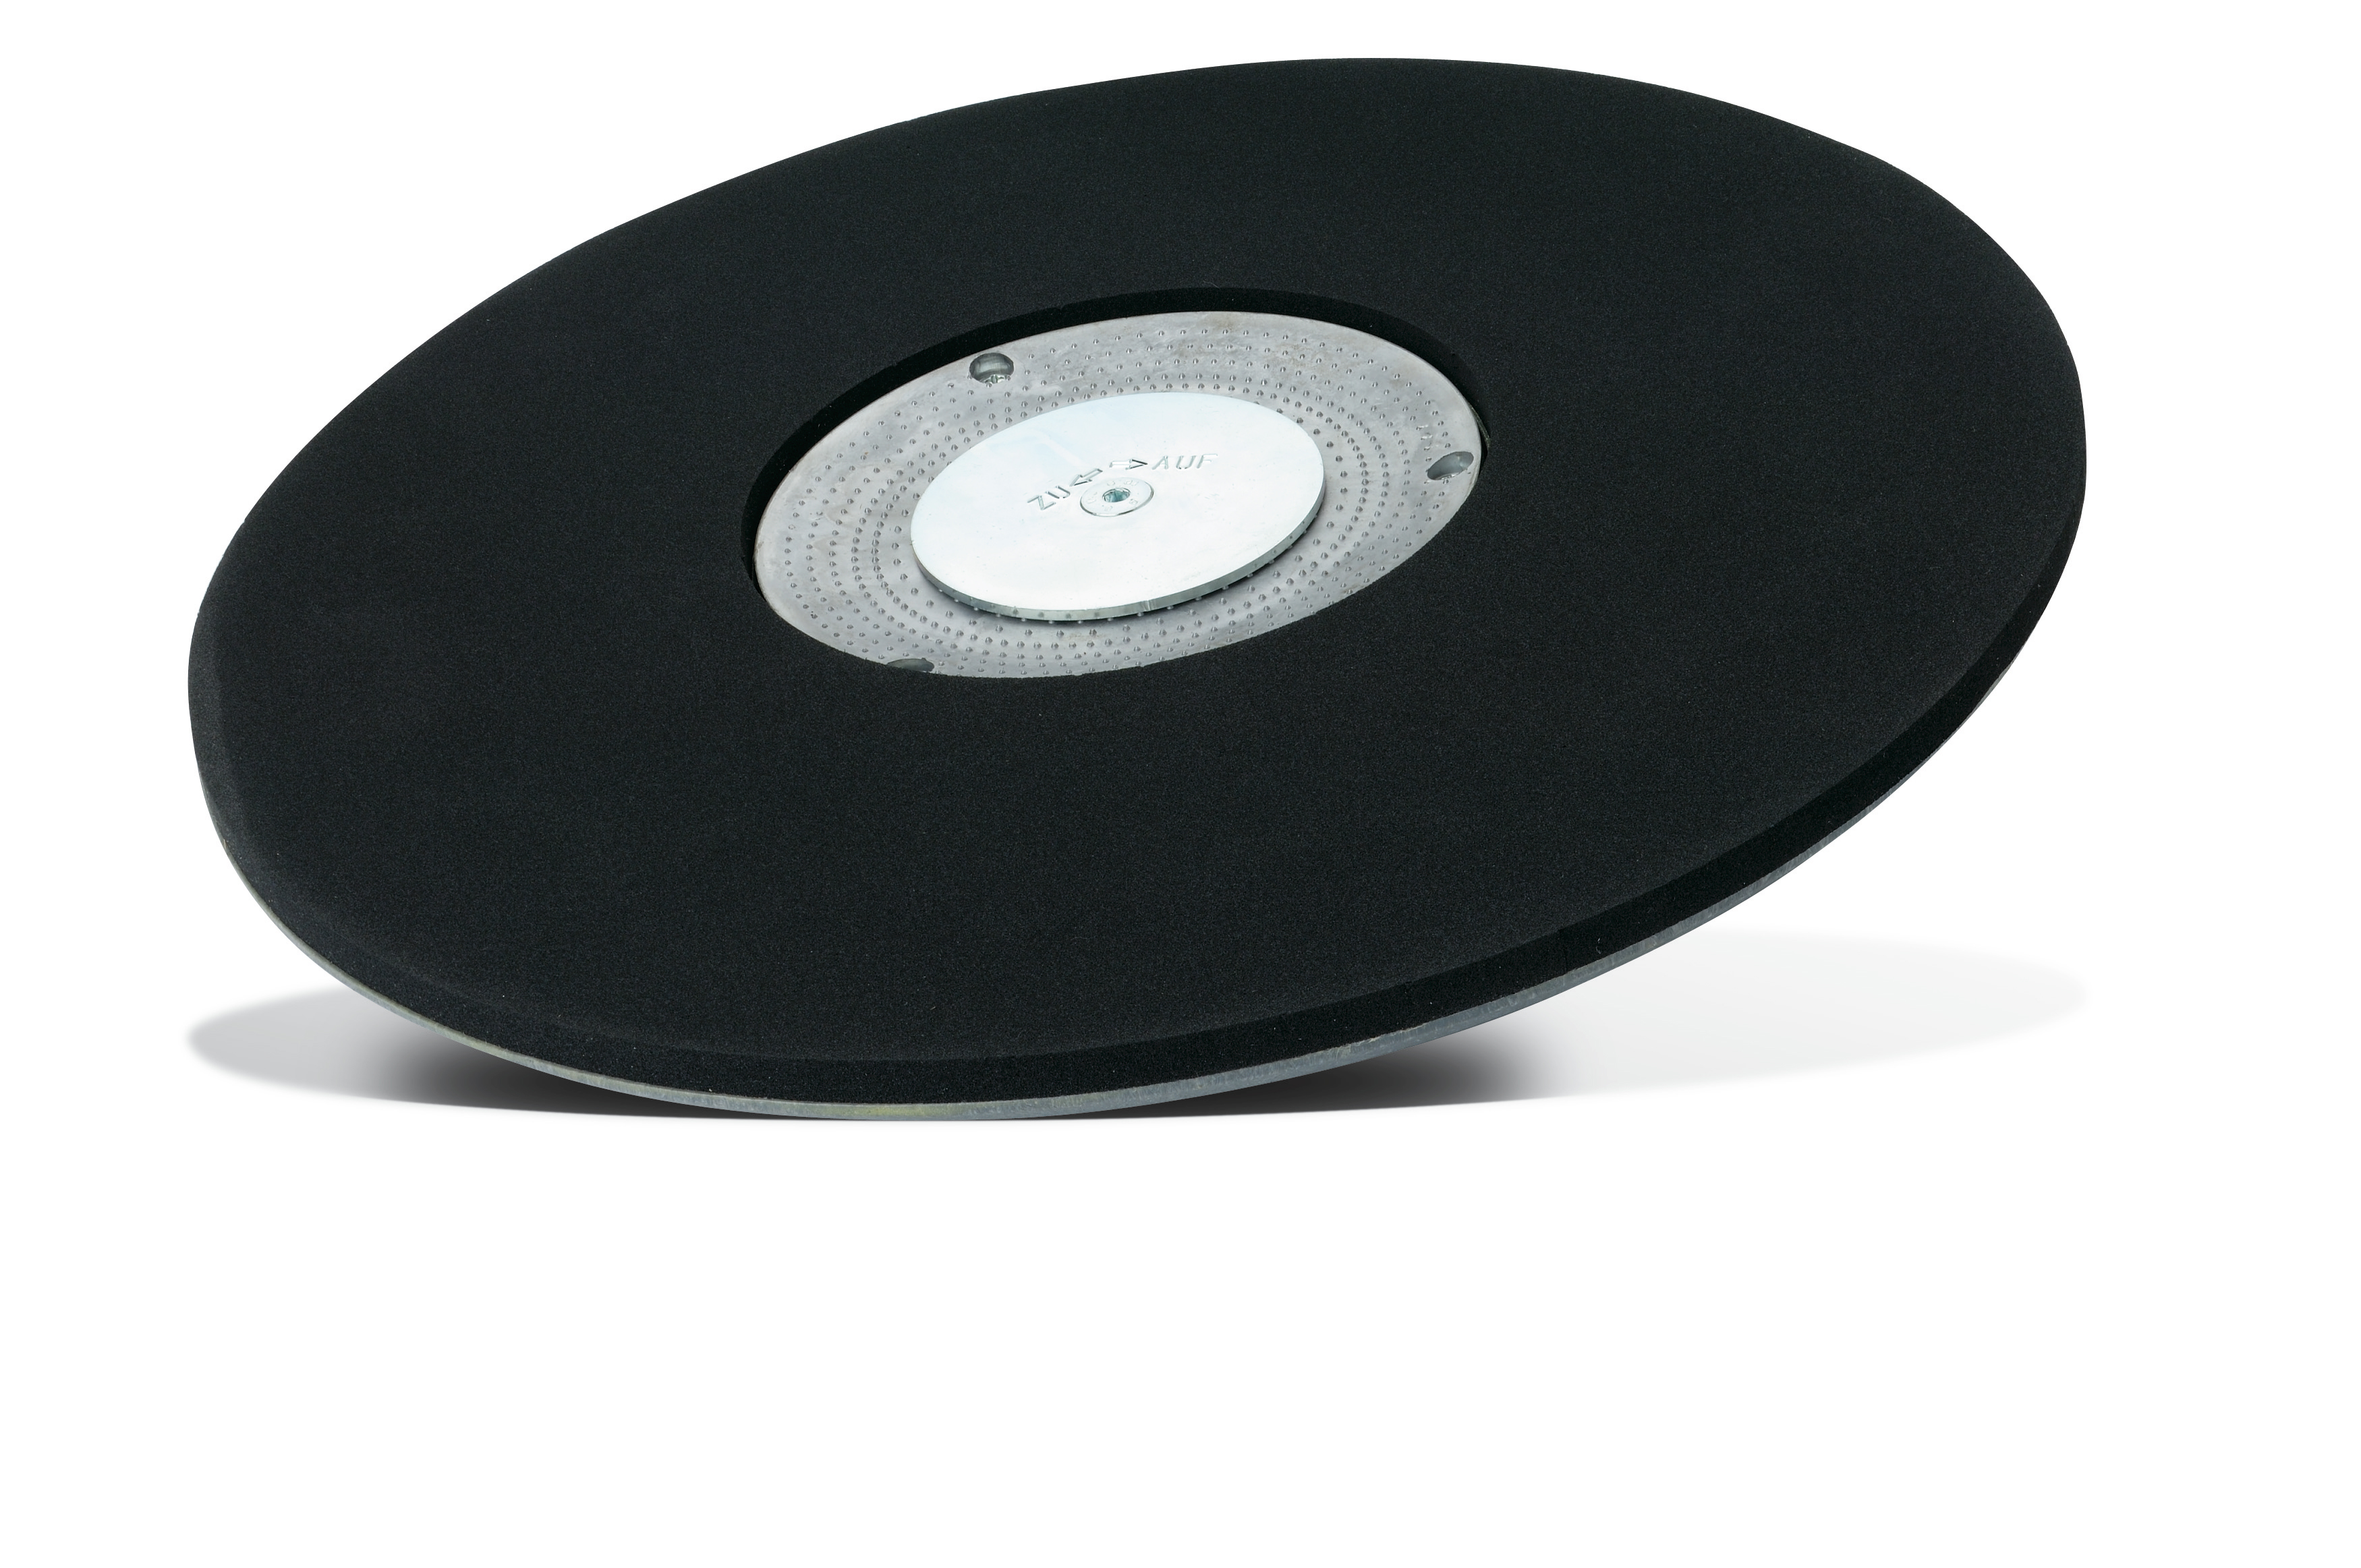 Disc holder with rubber-foam padding
405 mm diameter Pajarito